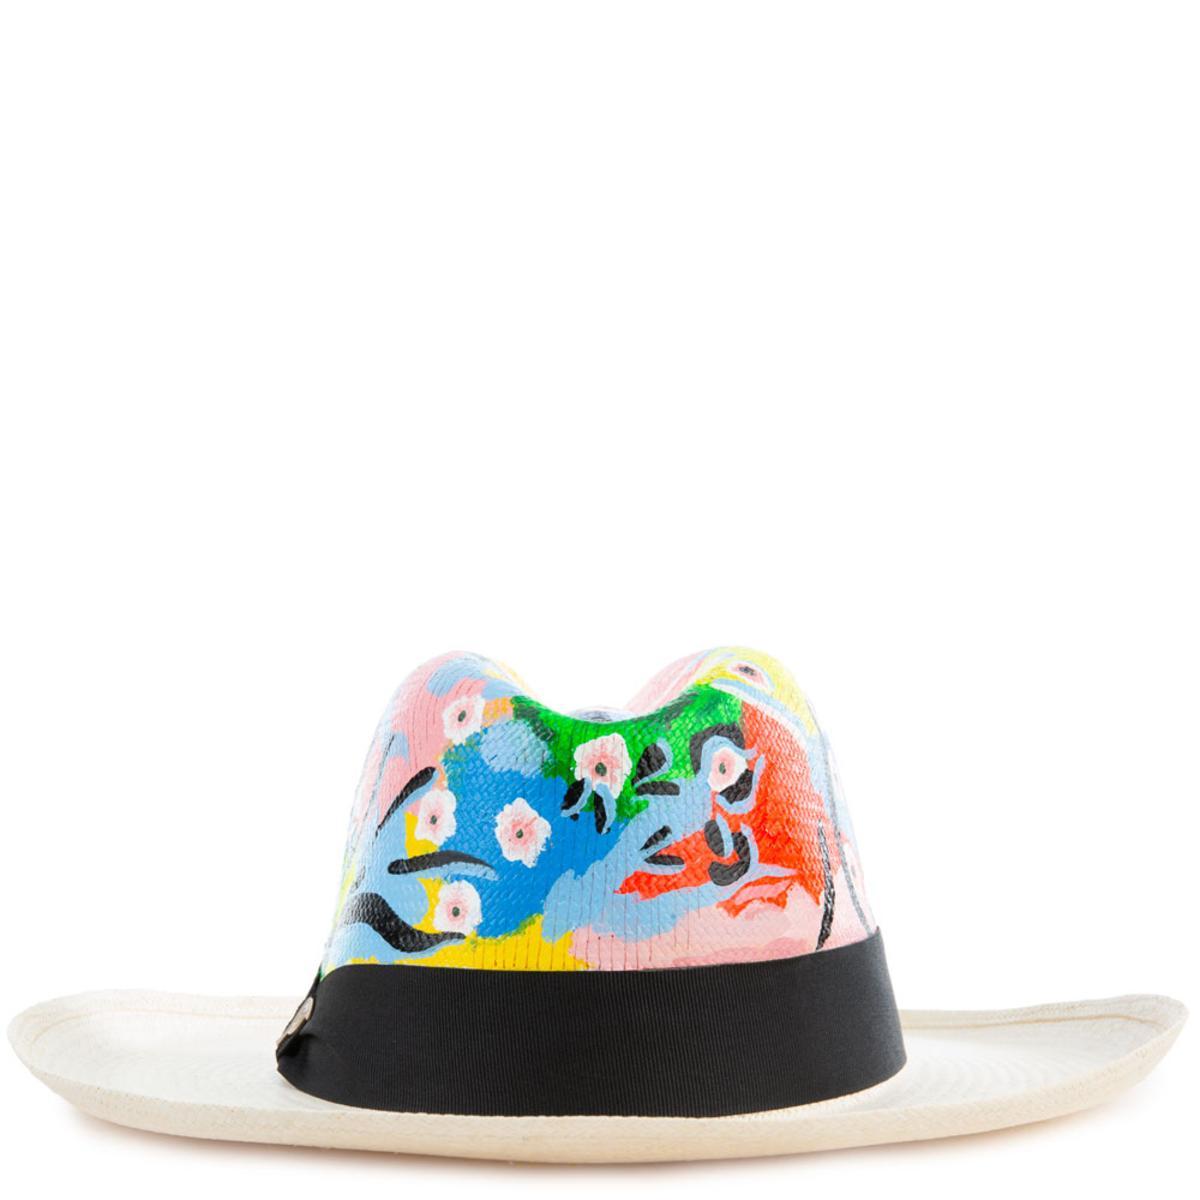 Oceano Multicolor Panama Hat Size S